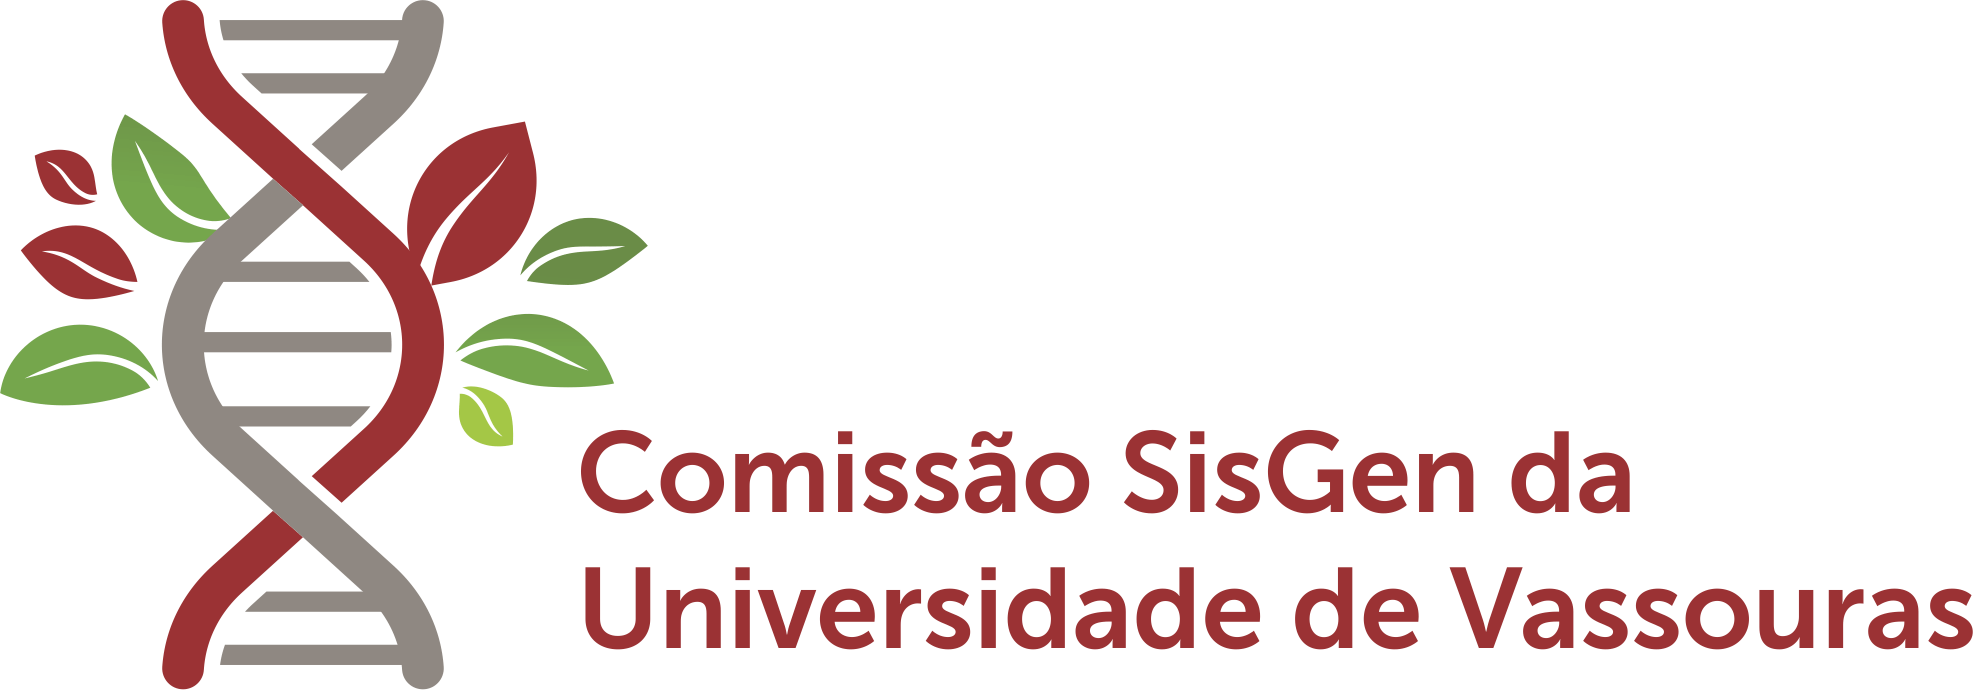 Logotipo da Universidade de Vassouras